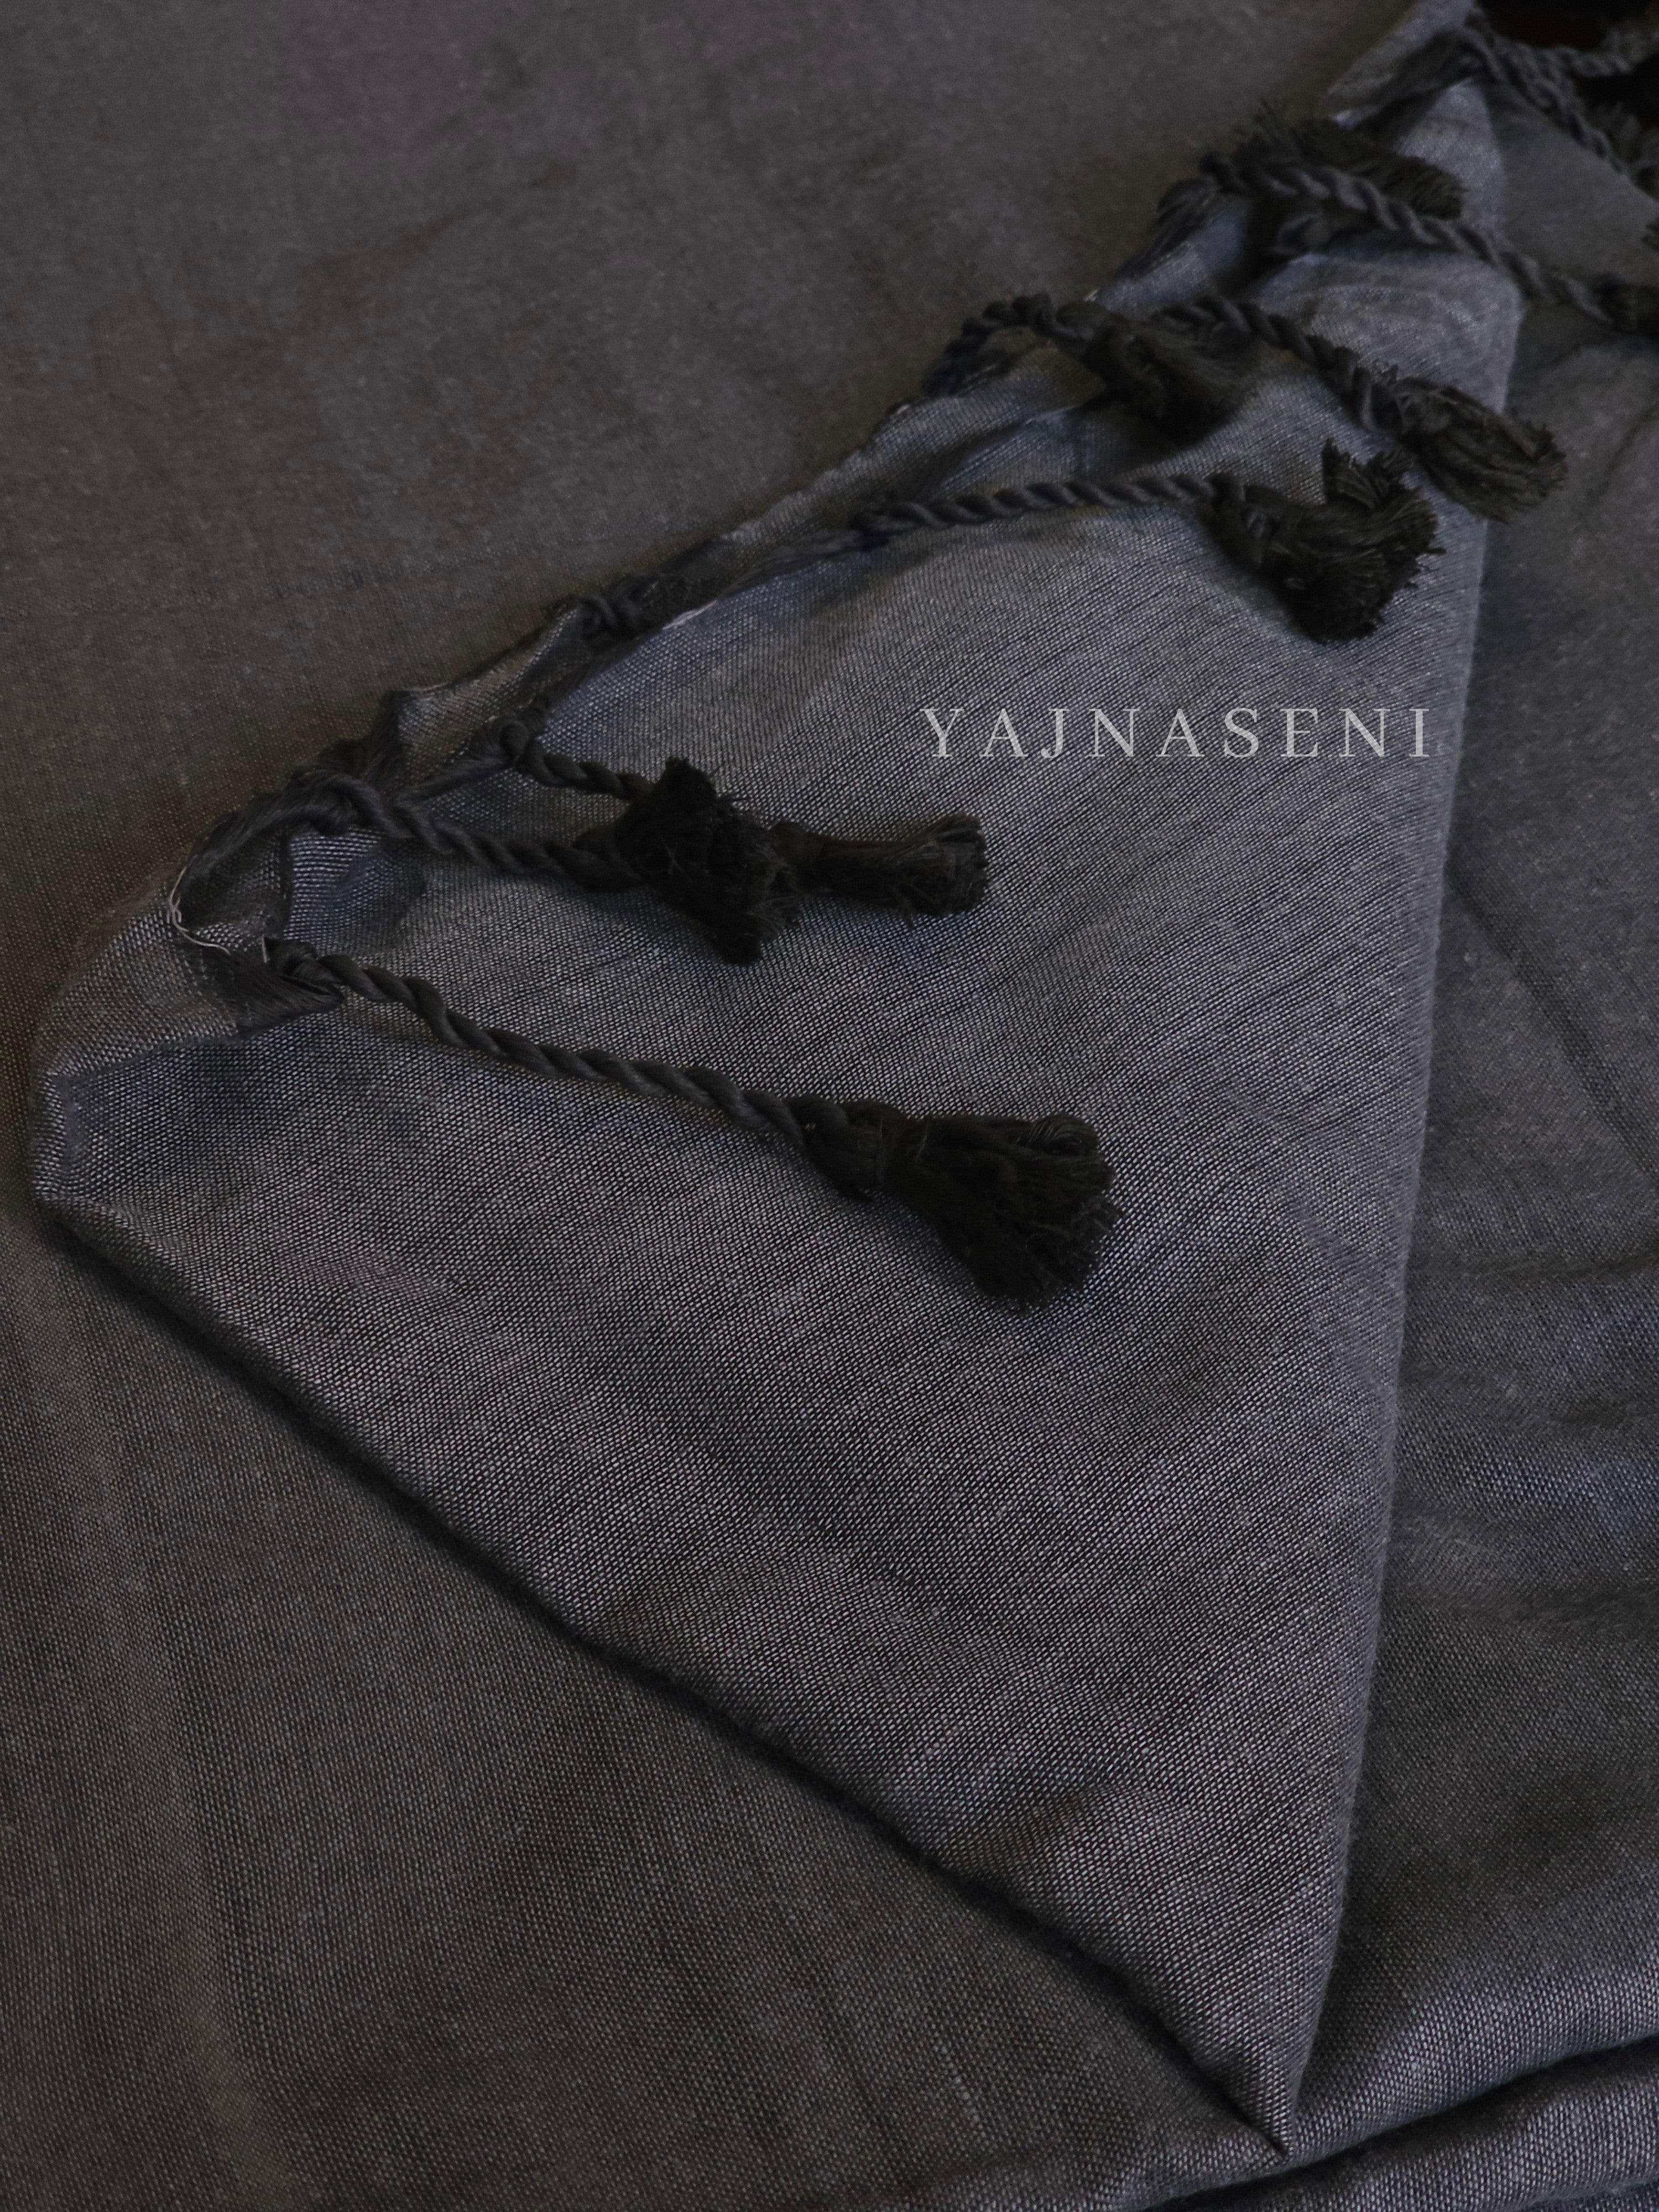 Khadi cotton plain saree x Embroidered blouse material : Grey